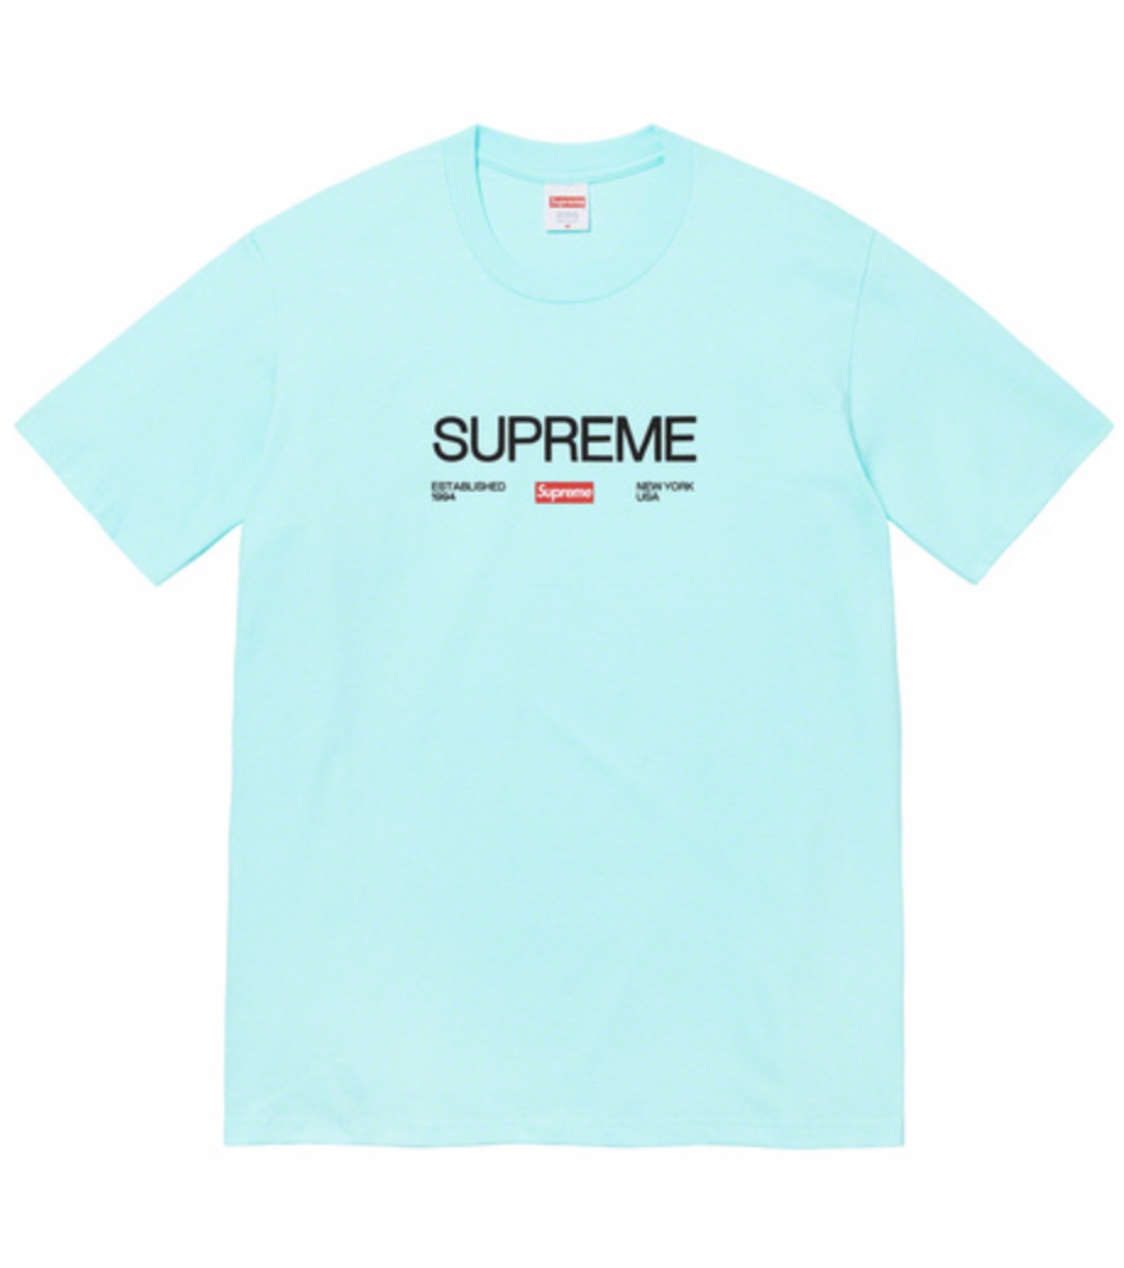 Supreme Est. 1994 Tee - Turquoise